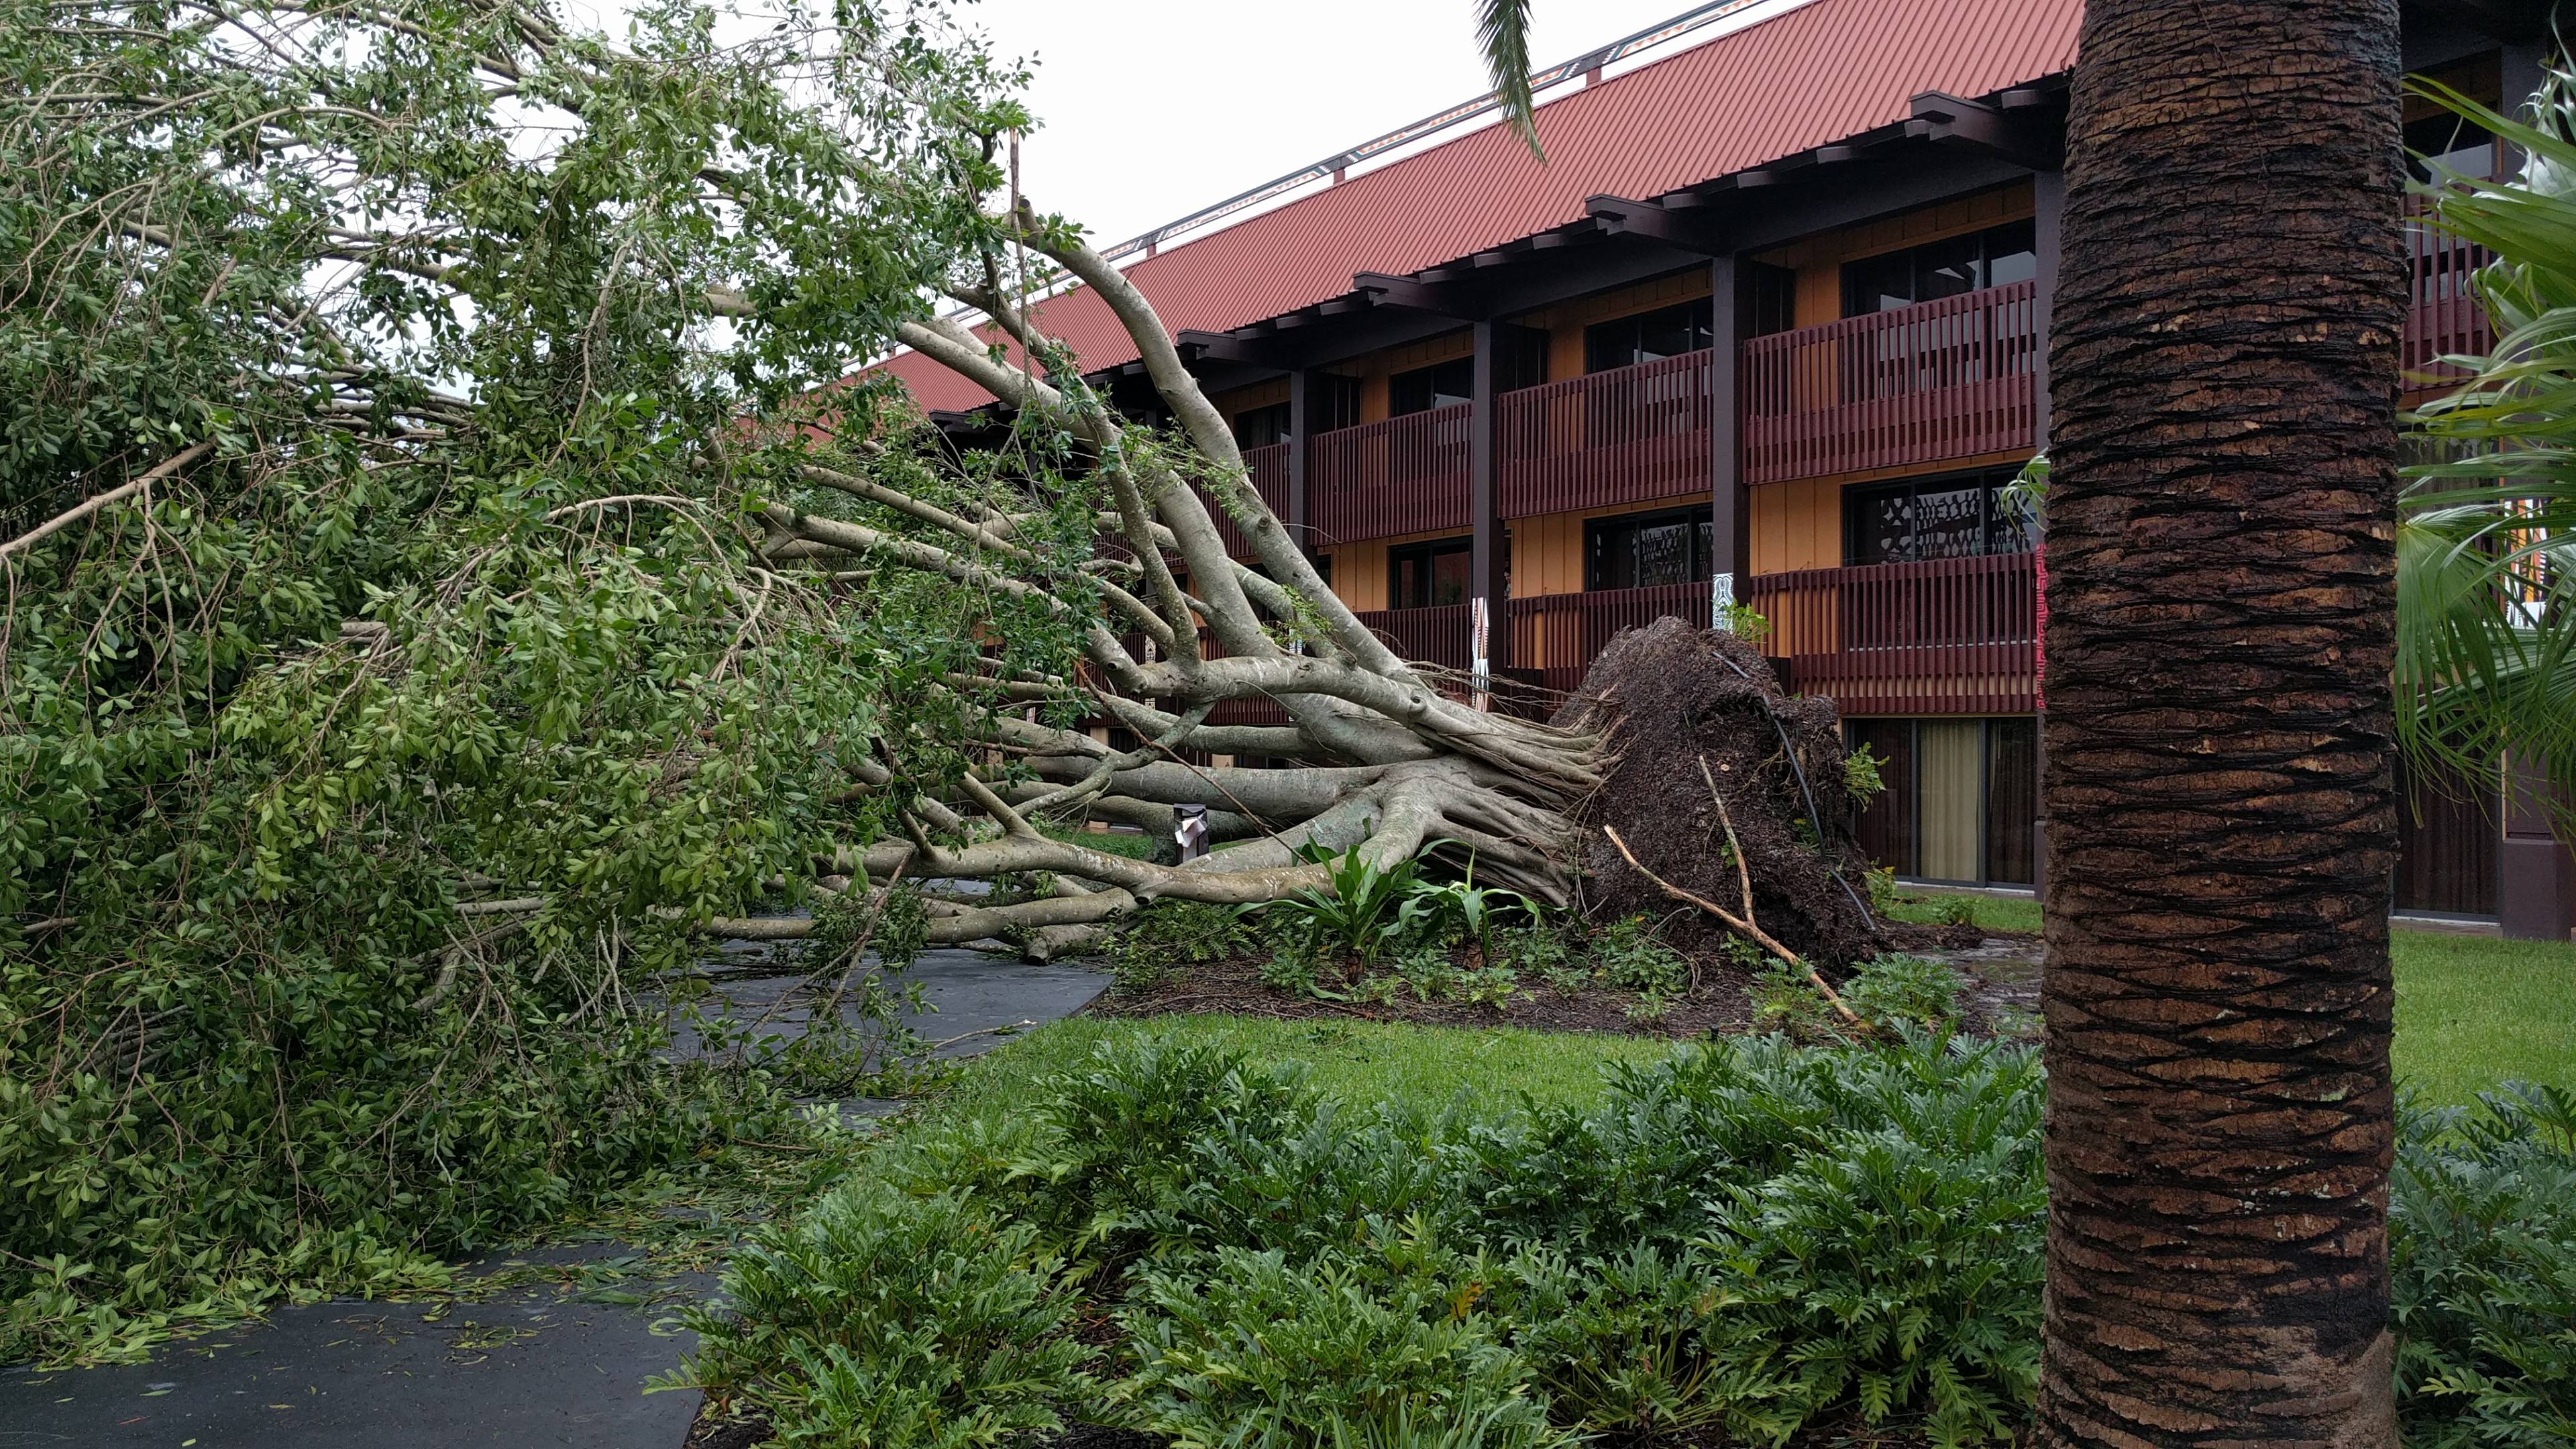 PHOTOS - Hurricane Irma damage at Disney's Polynesian Resort